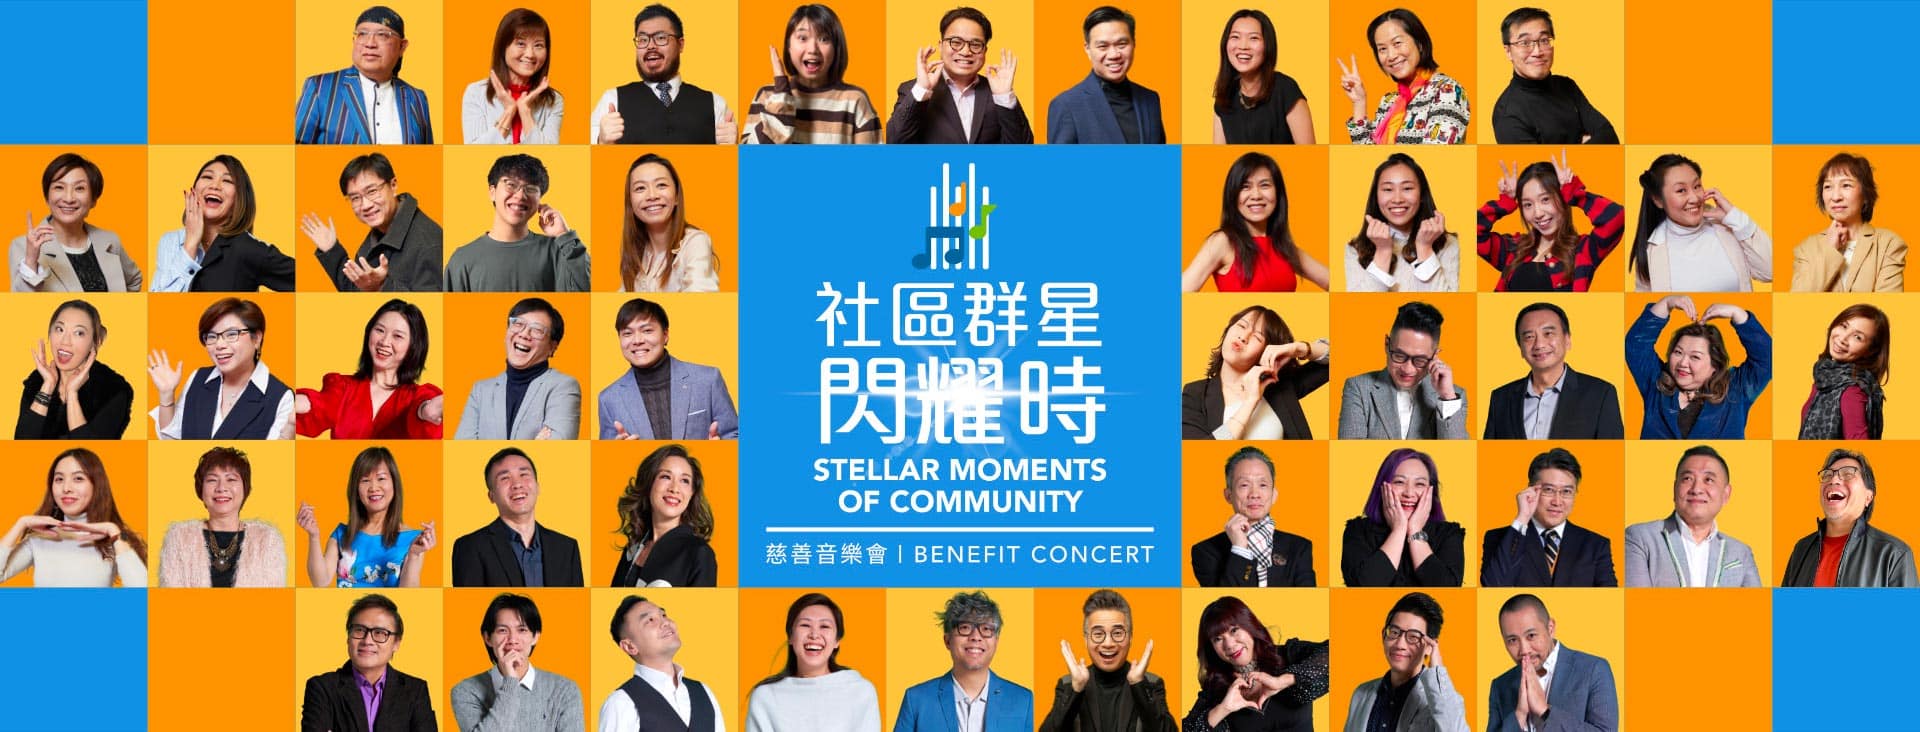 Stellar Moments of Community Benefits Concert